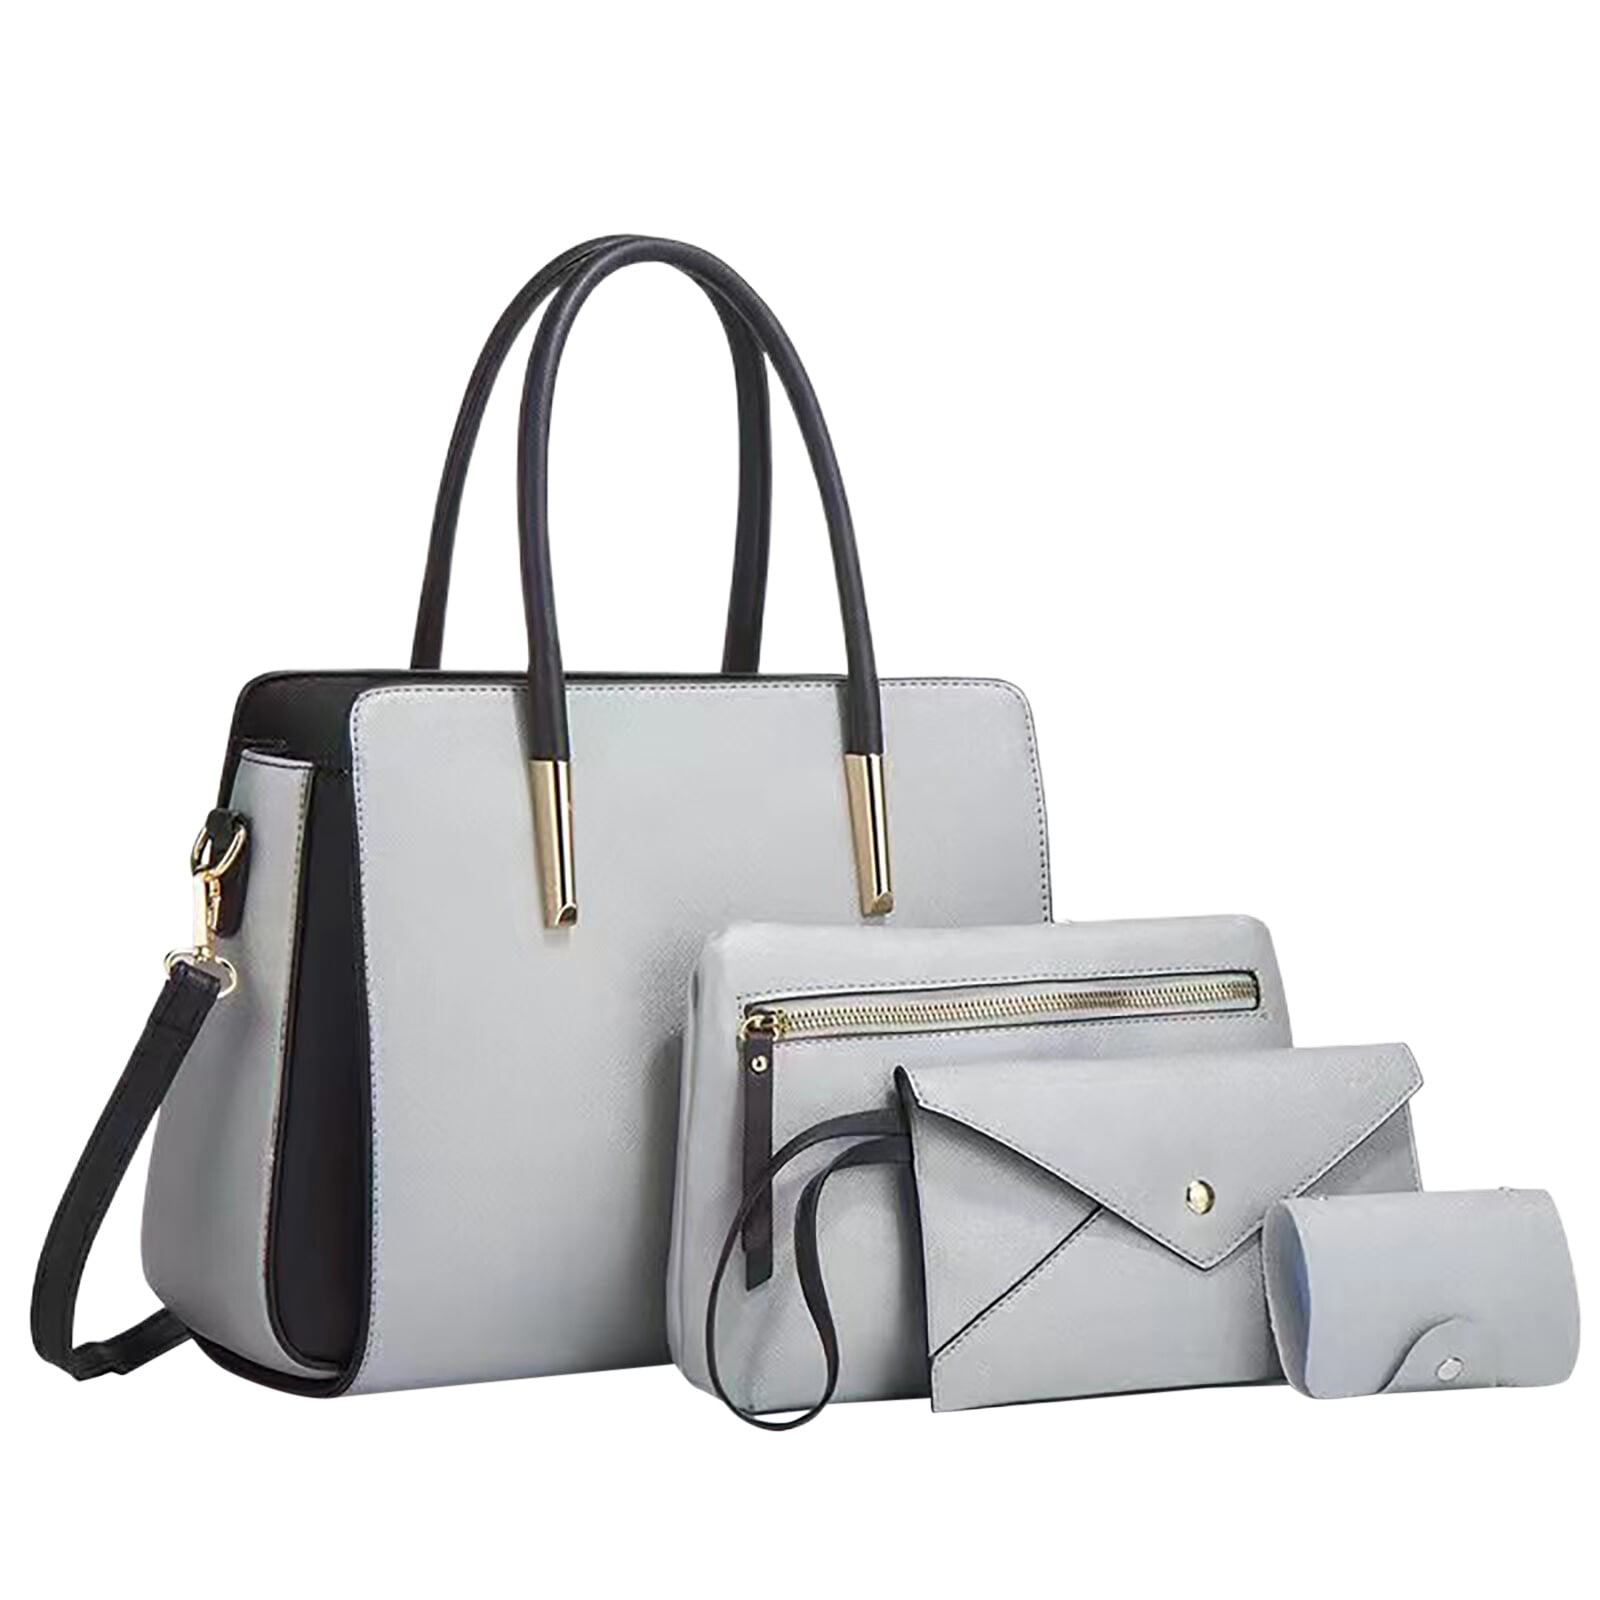 PARADOX (LABEL) Womens Fashion Hand Bag Ladies Purses Satchel Shoulder Bags  Gift | eBay